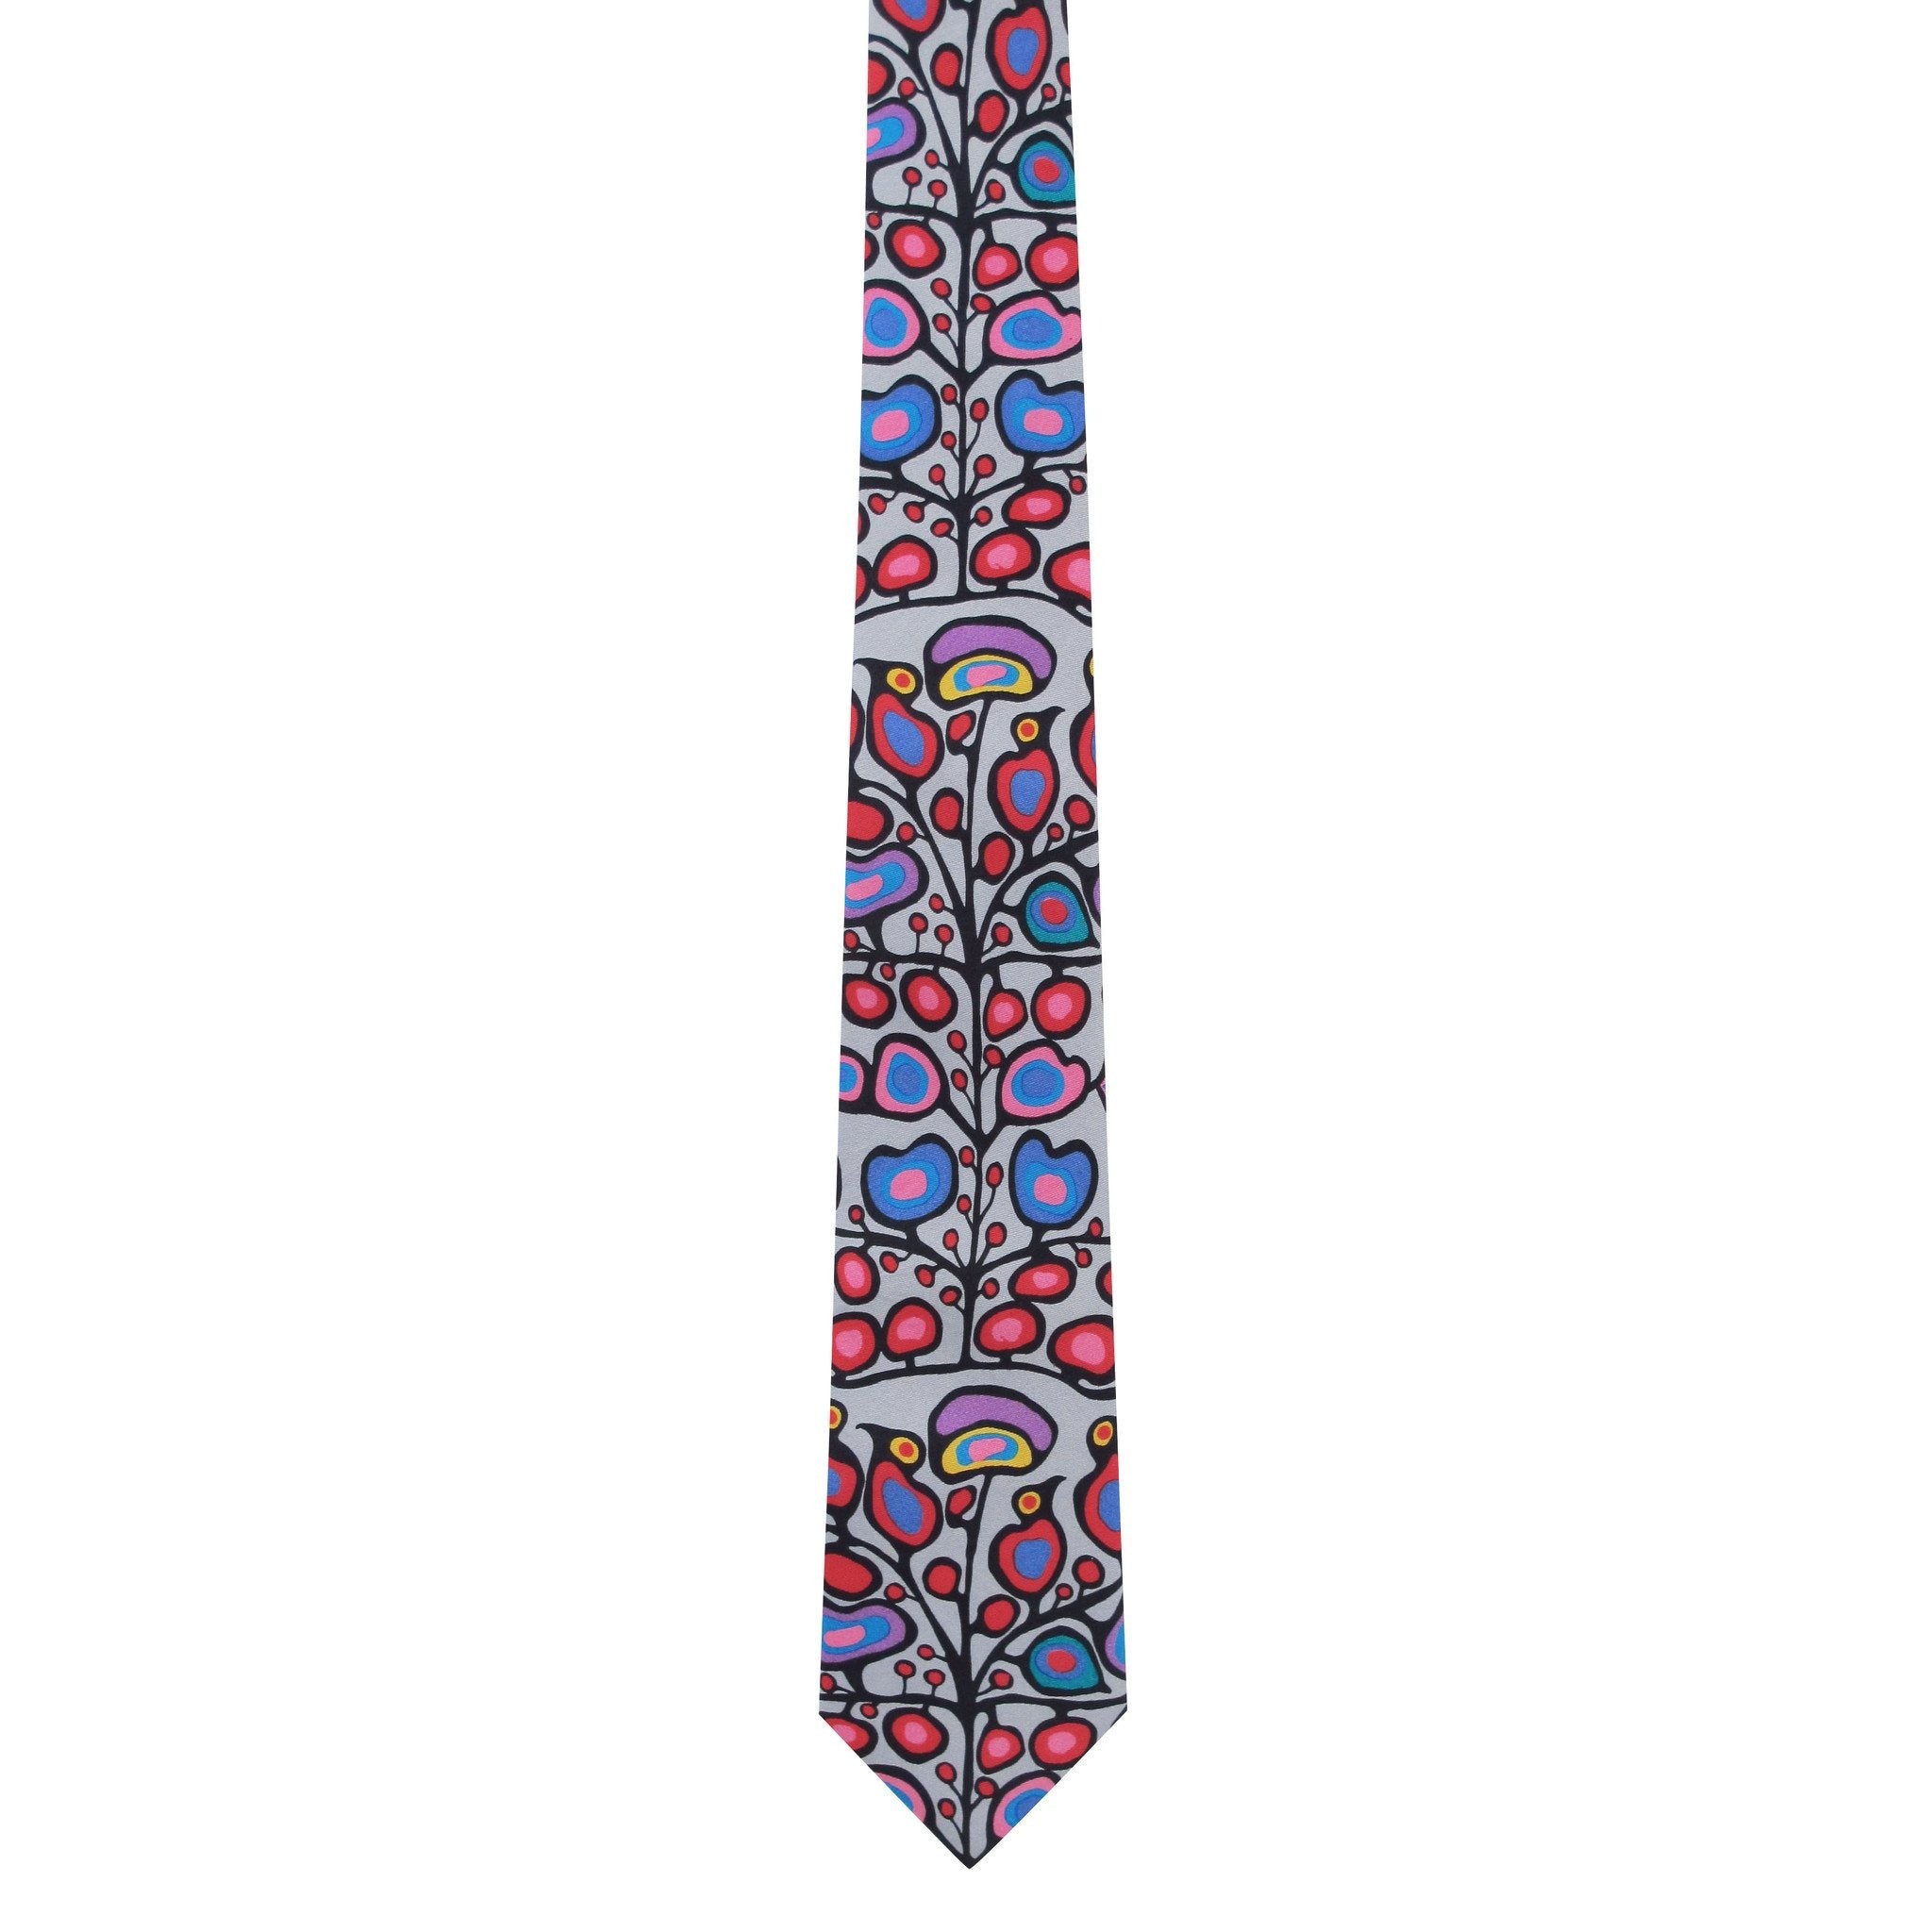 Norval Morrisseau Woodland Floral Artist Design Silk Tie - Oscardo